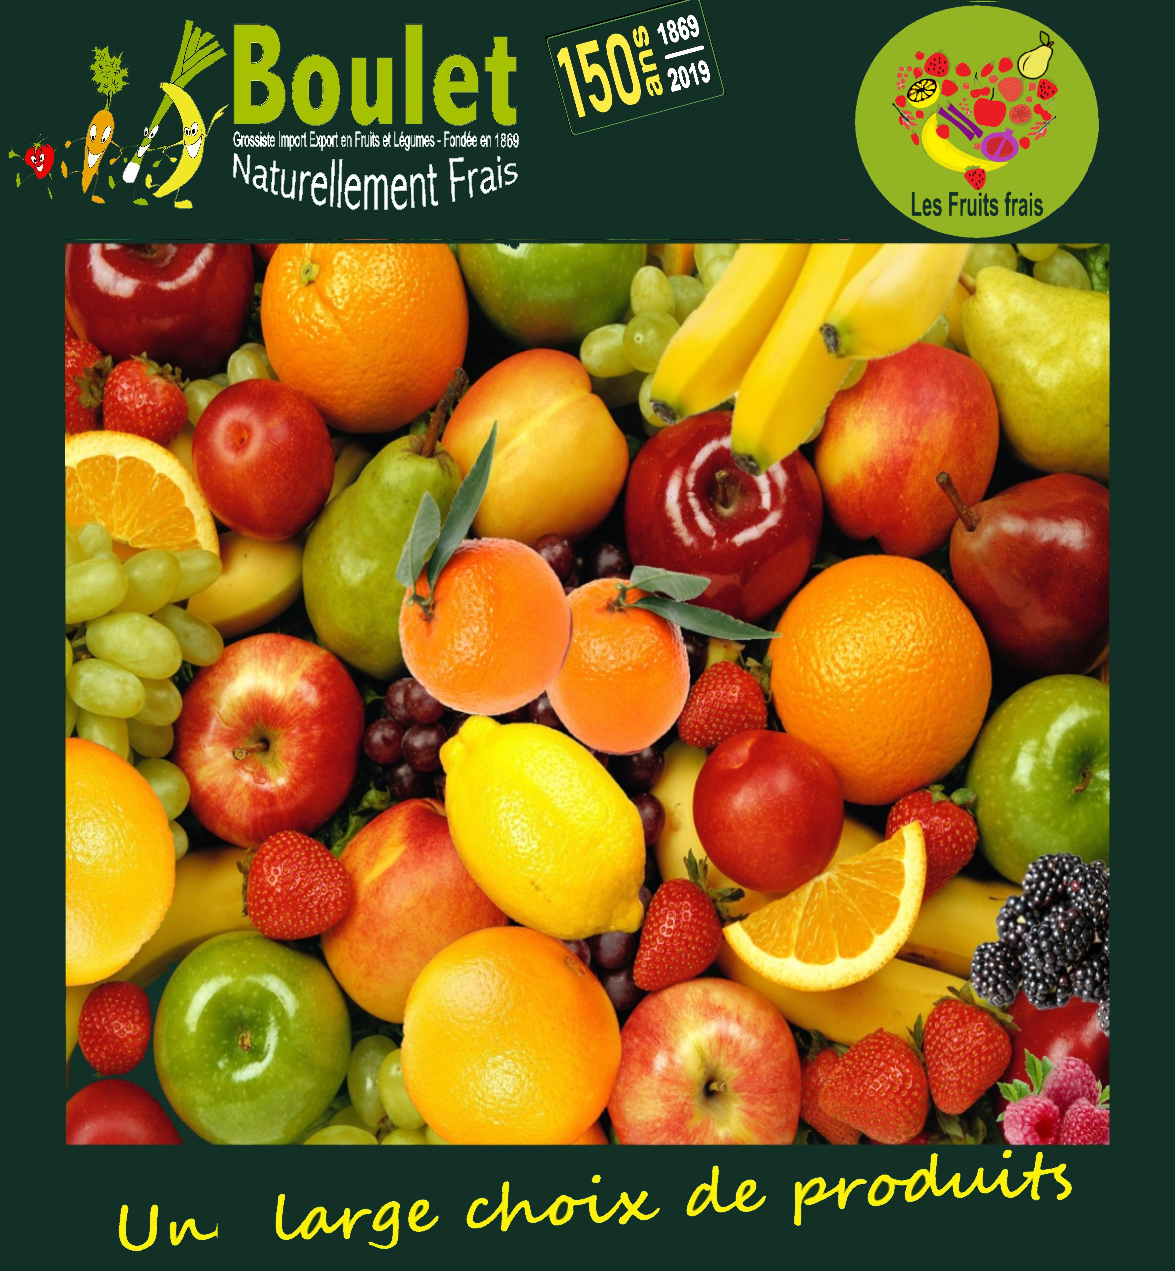 BOULET F&L FRUITS FRAIS CAROUSSEL.jpg